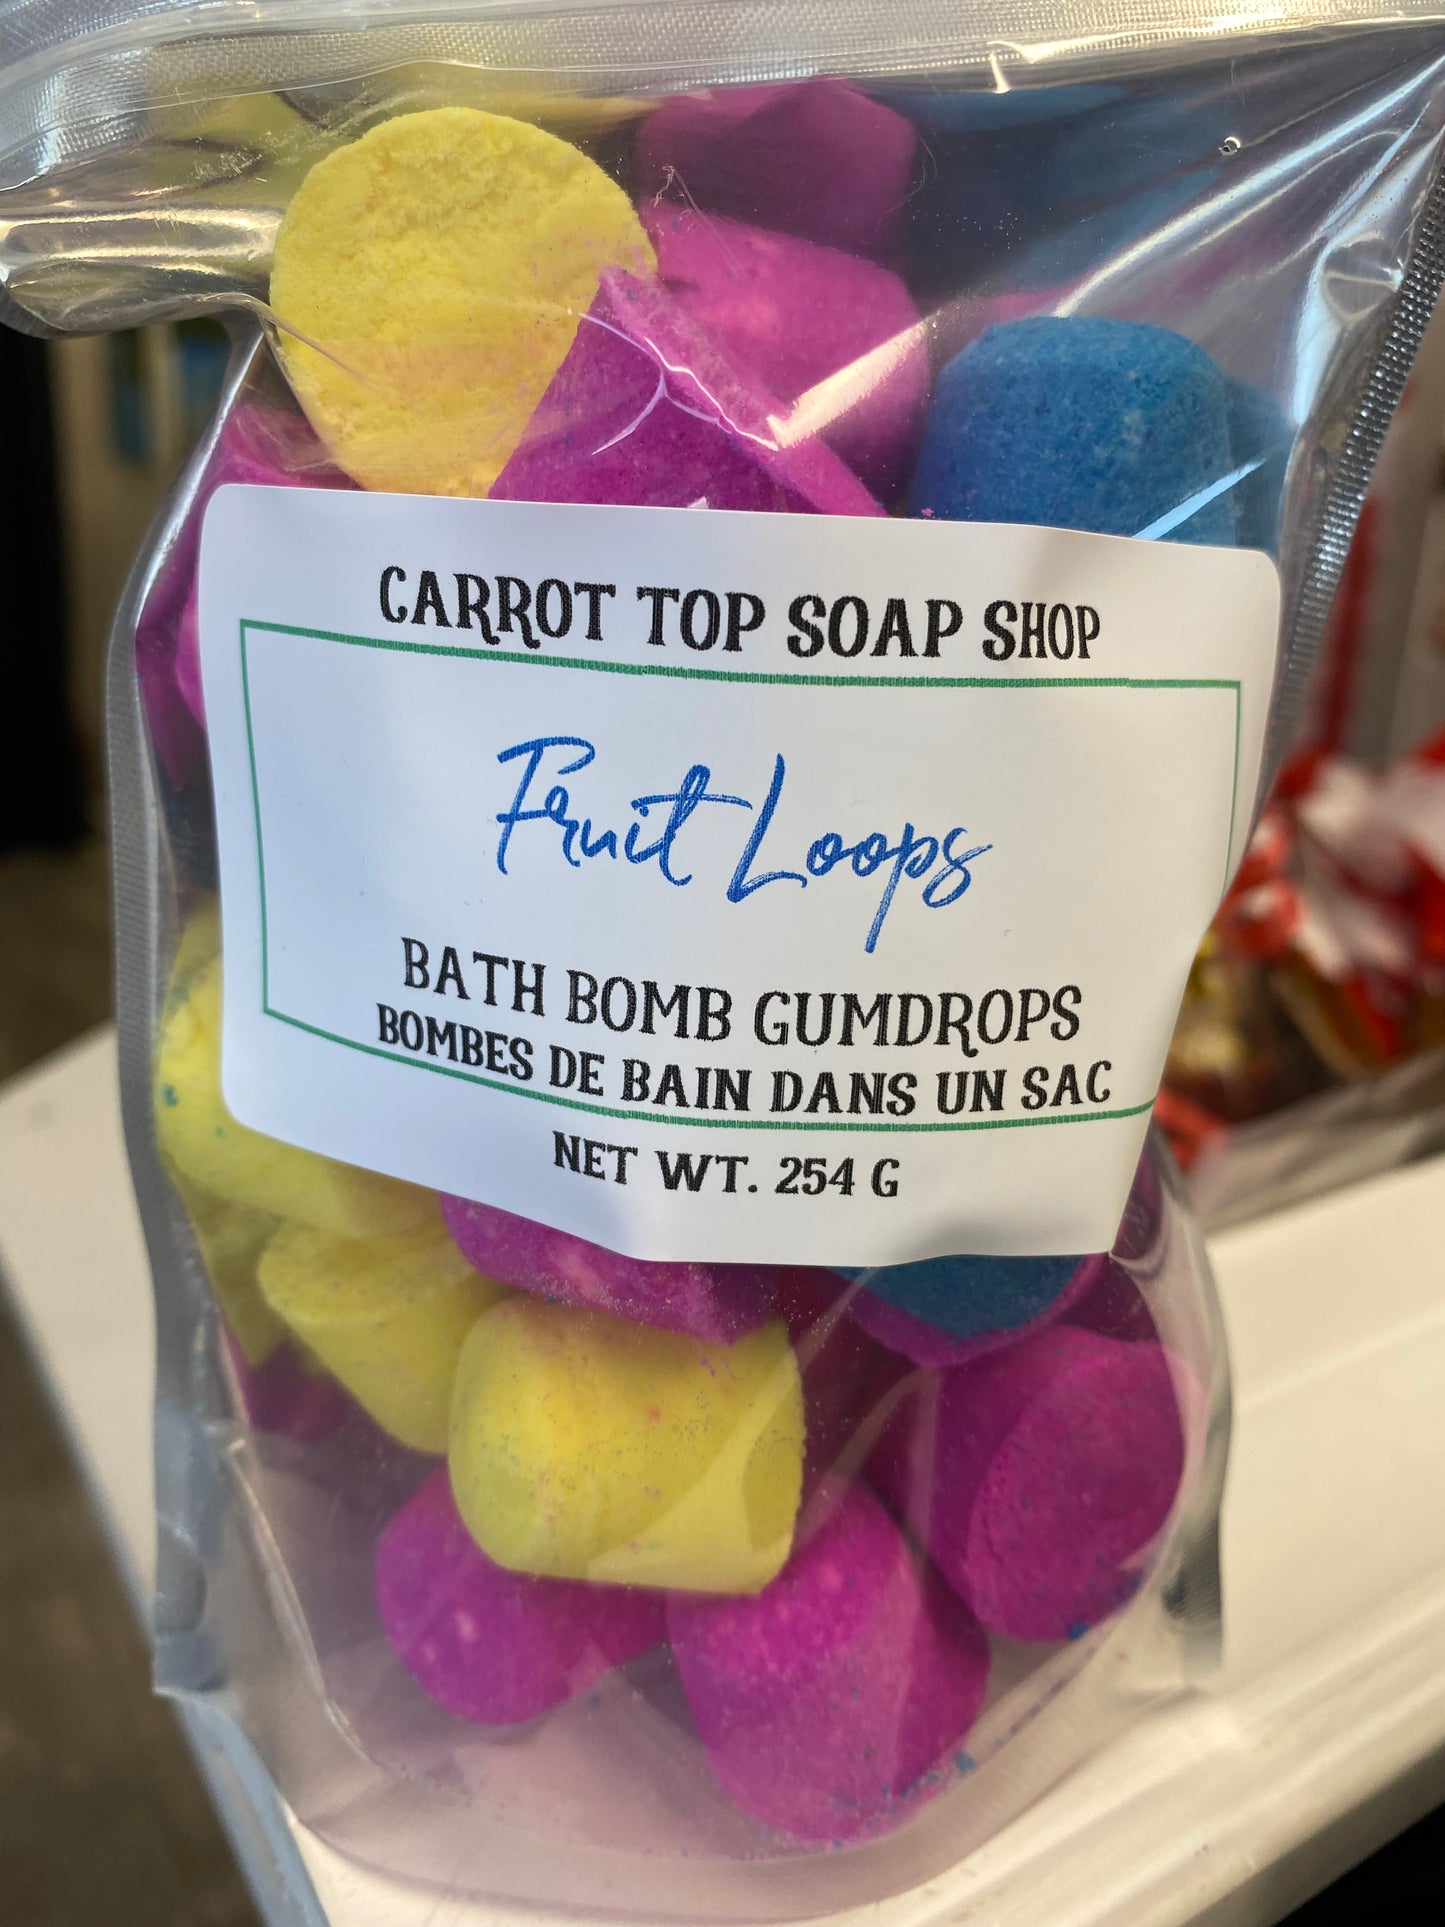 Fruit Loops Bath Bomb Gumdrops